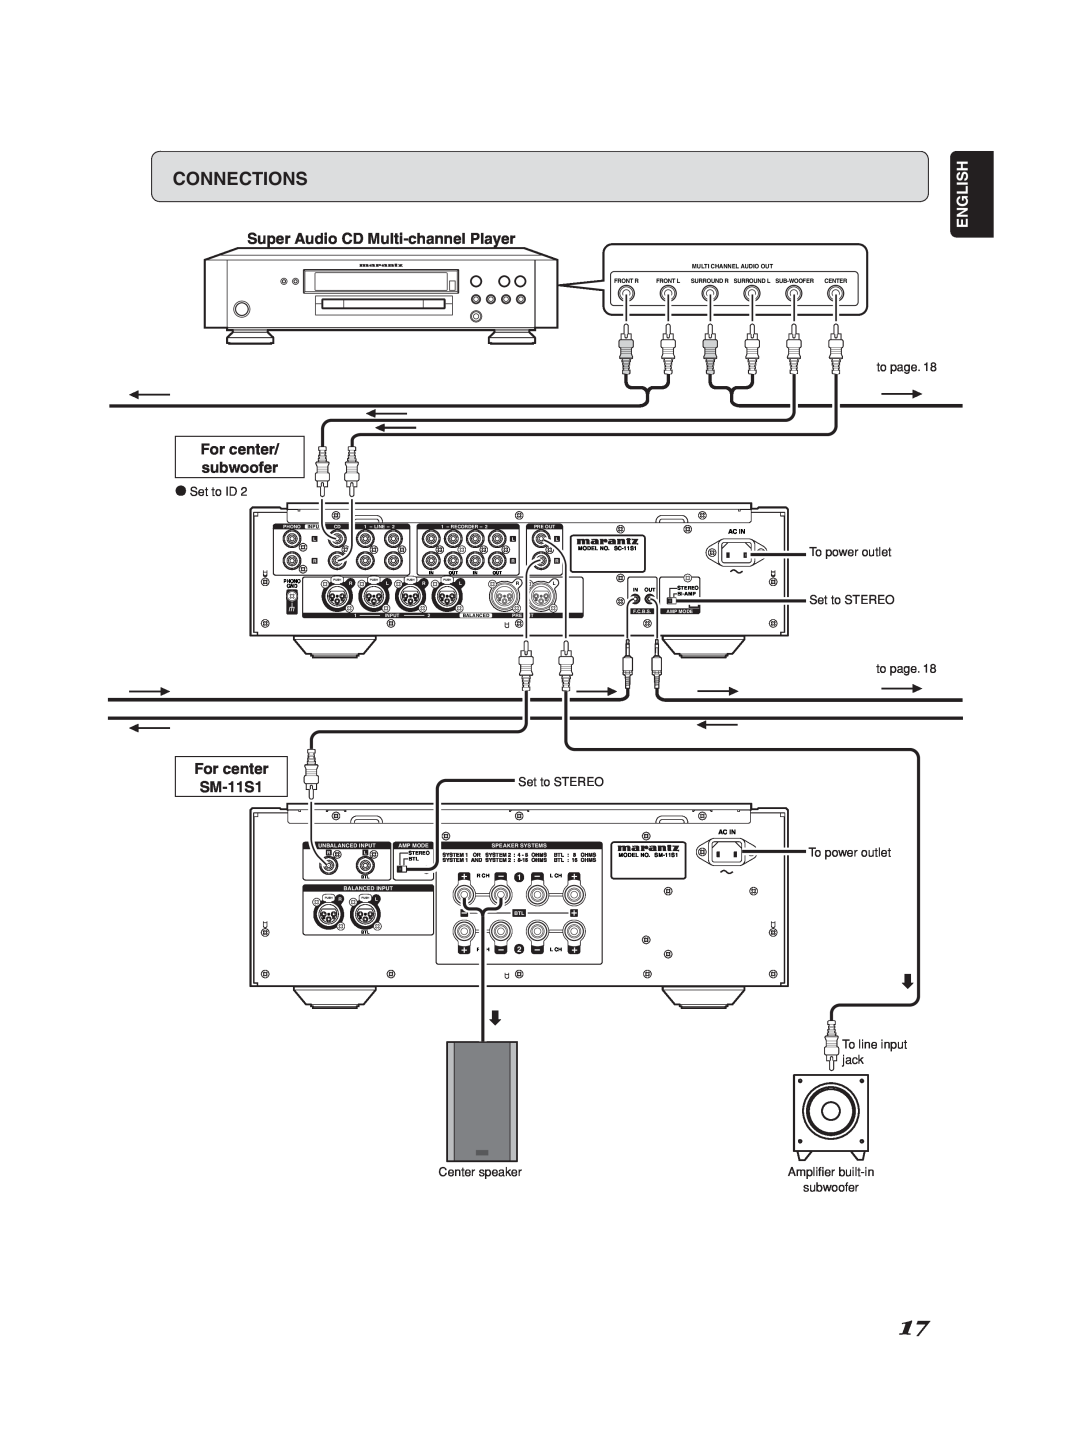 Marantz Model SC-11S1 manual English, subwoofer, Ac In, Unbalanced Input, Amp Mode, Speaker Systems 